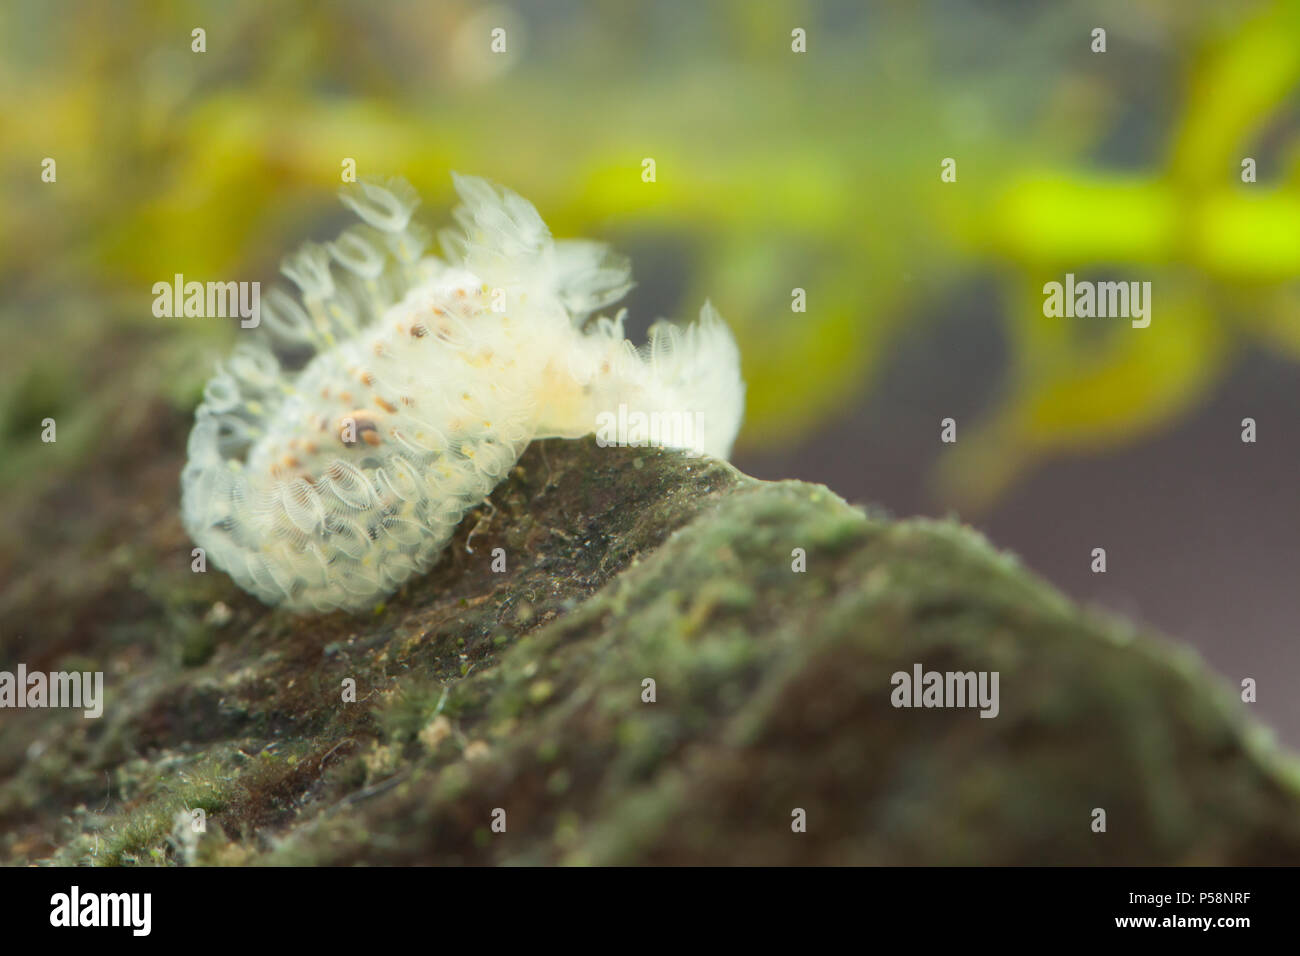 Freshwater moss animal (dividing) Stock Photo